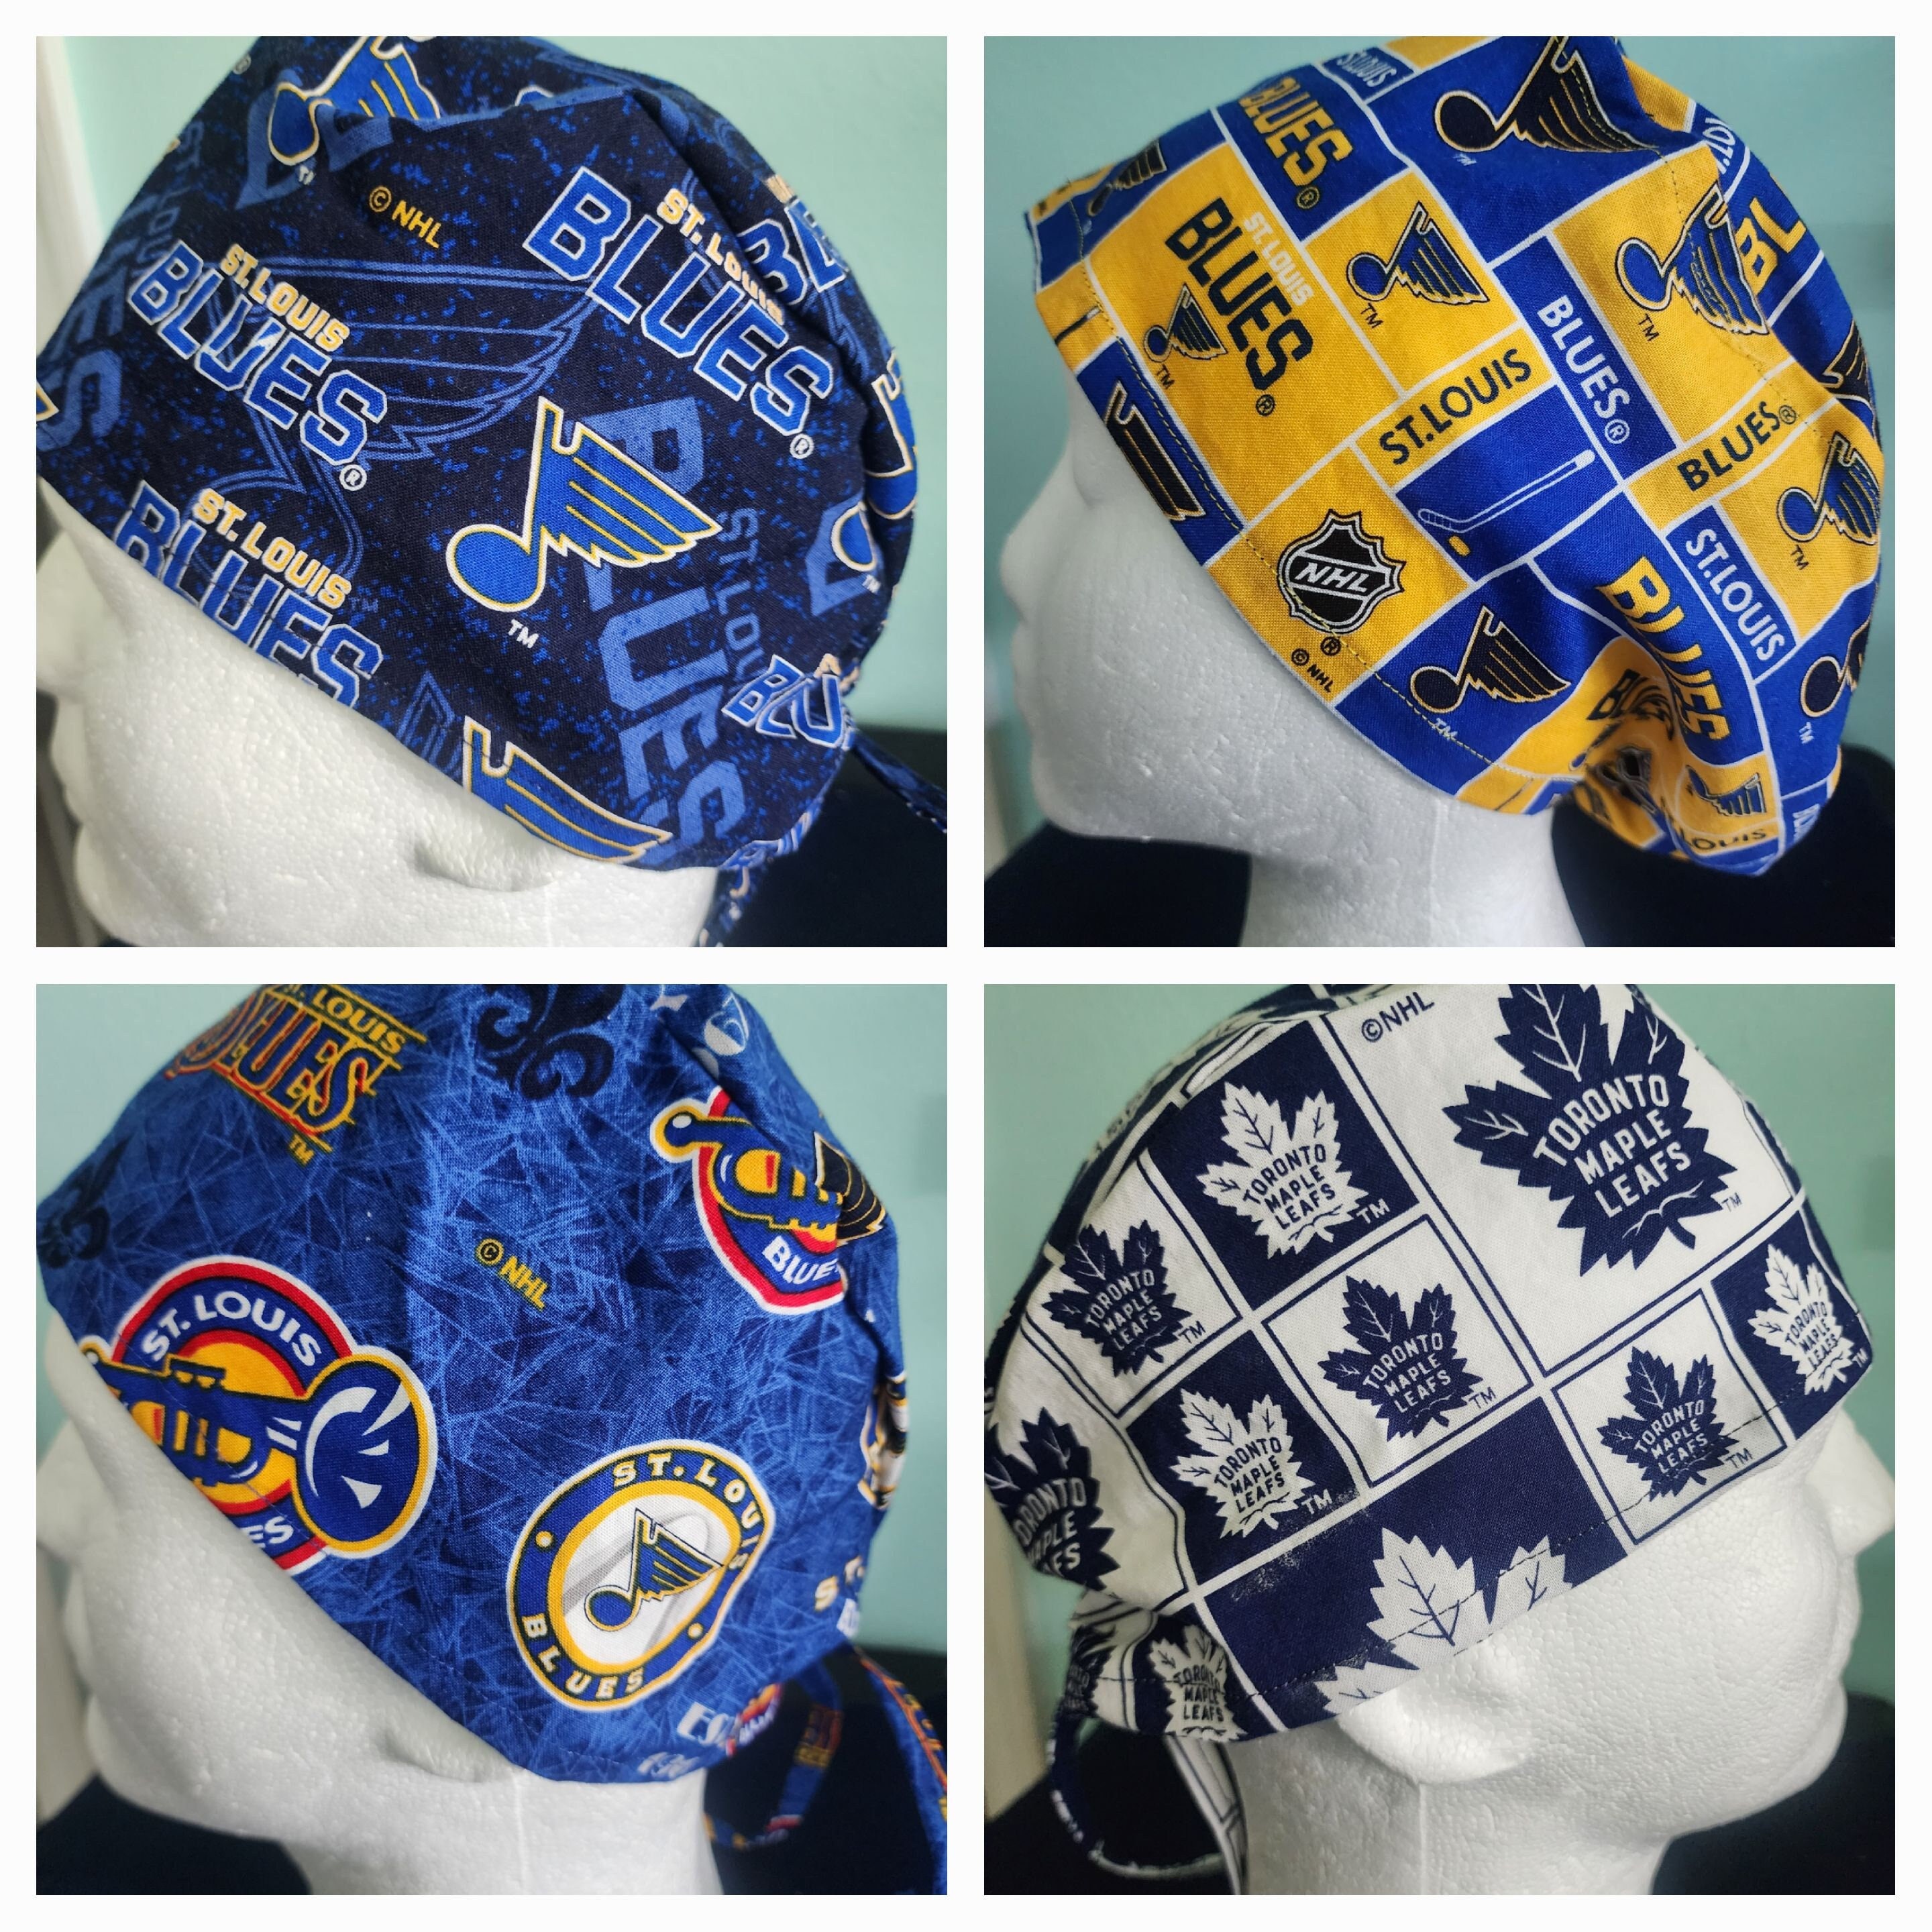 Youth Blue St. Louis Blues Impact Fashion Snapback Hat